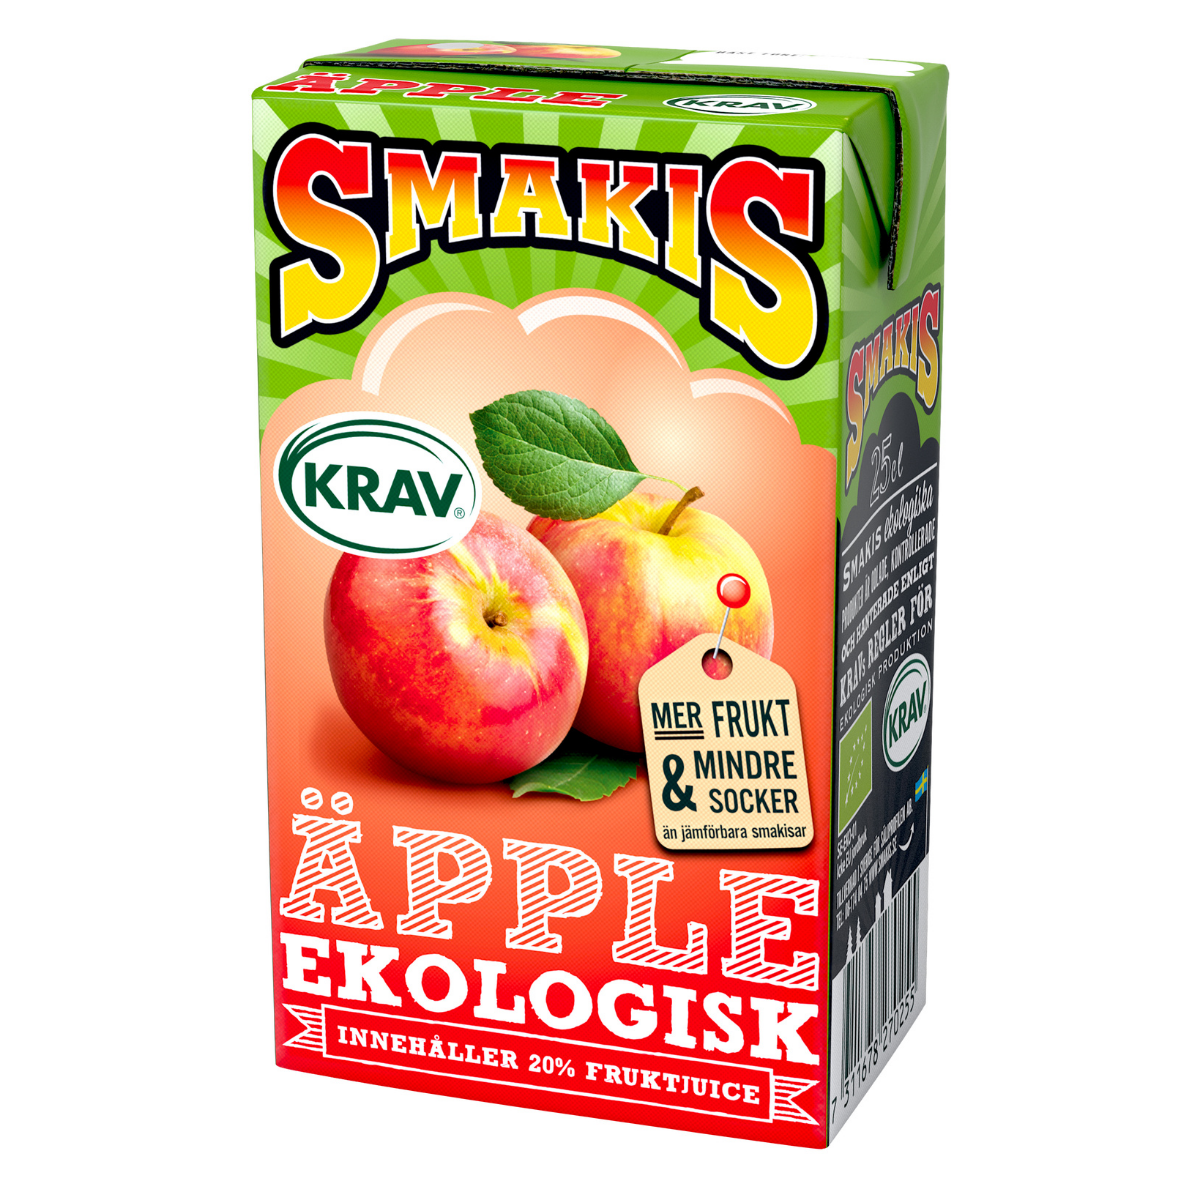 Smakis's Apple drink '